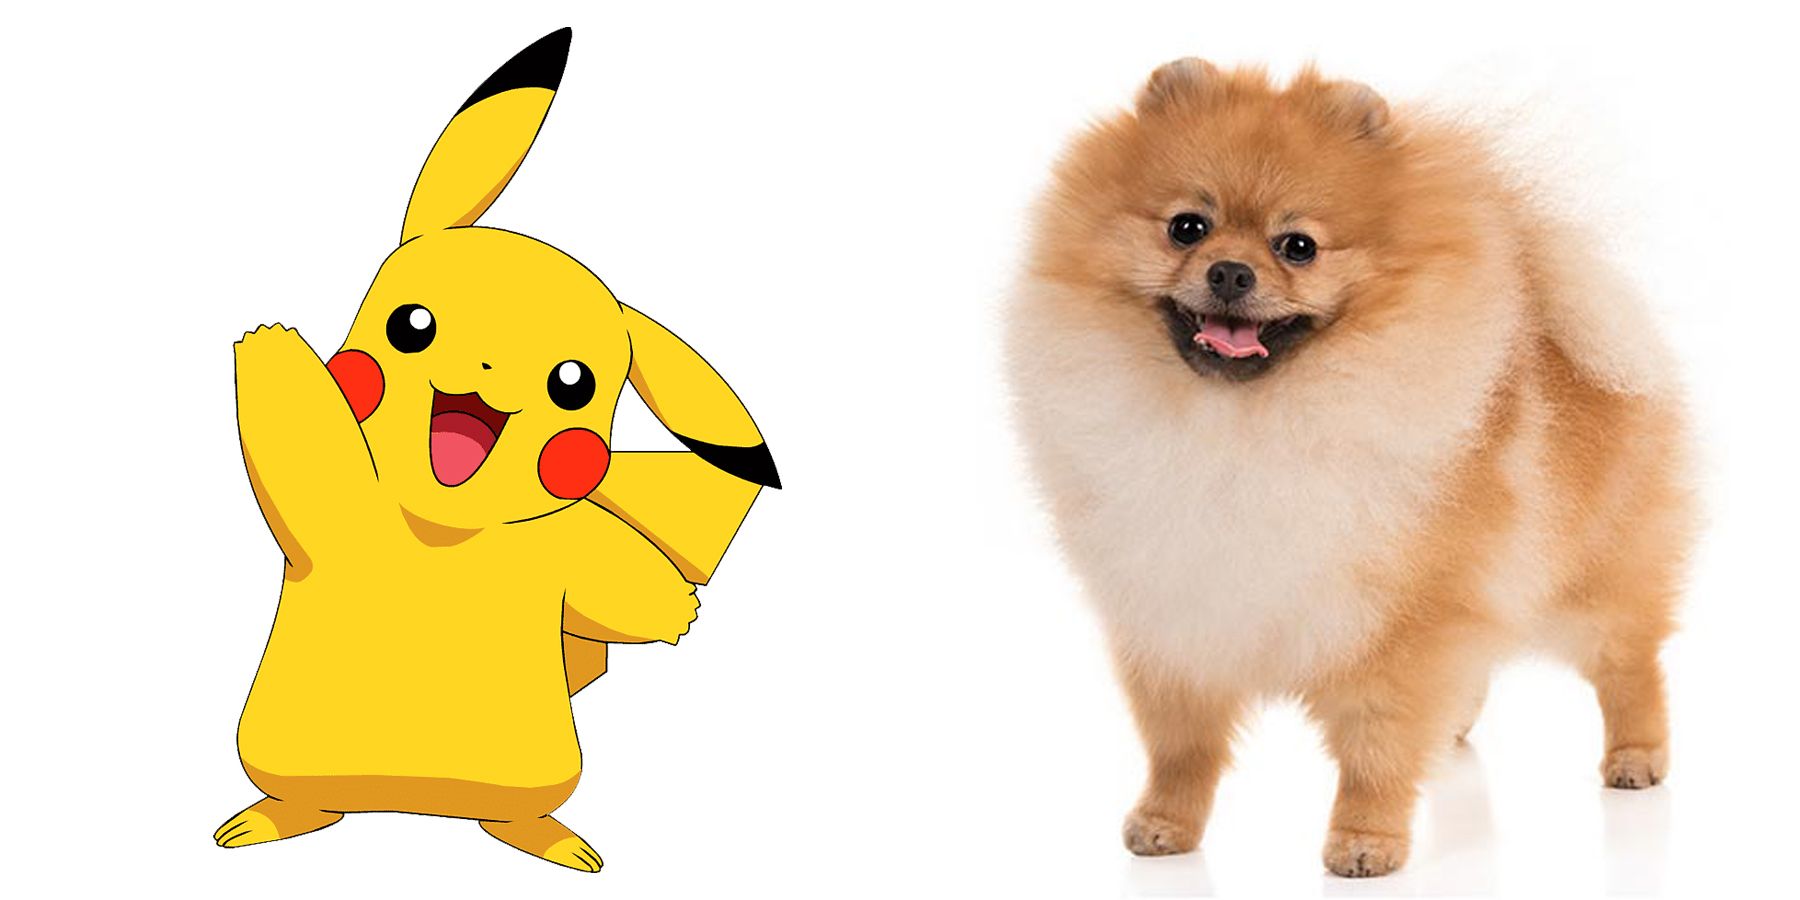 Pokemon Pikachu and a Pomeranian